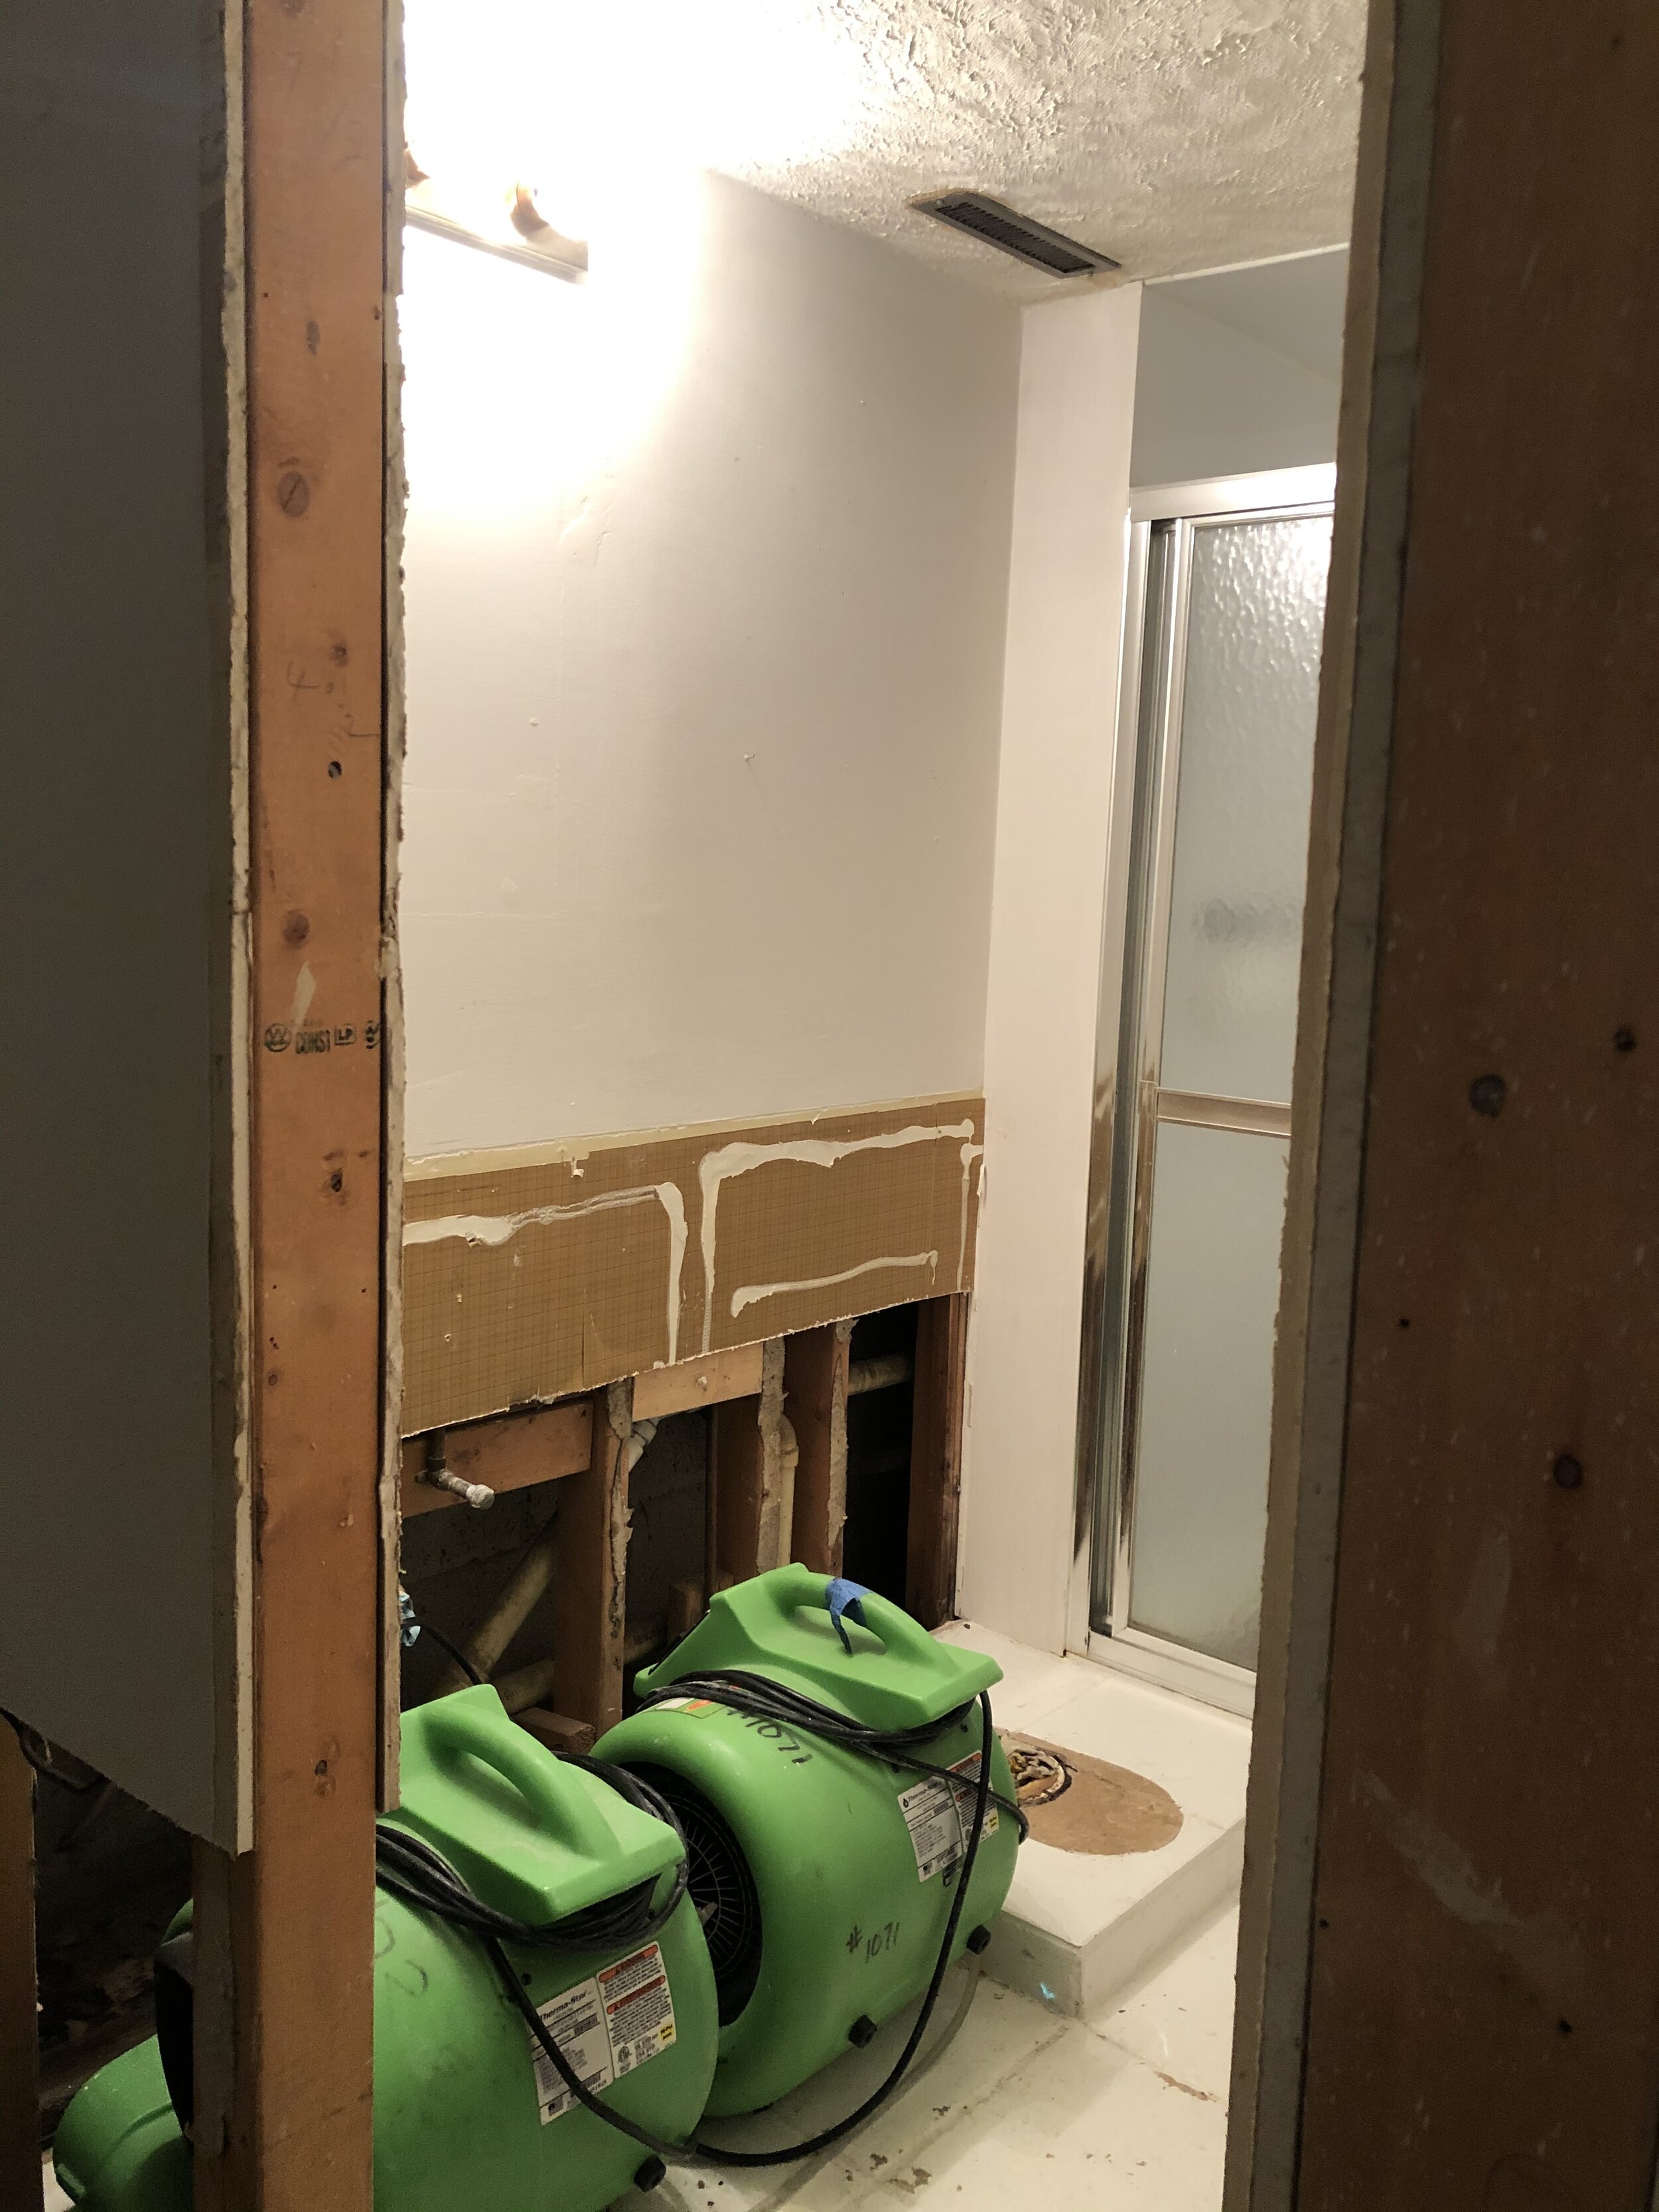 Bathroom under construction